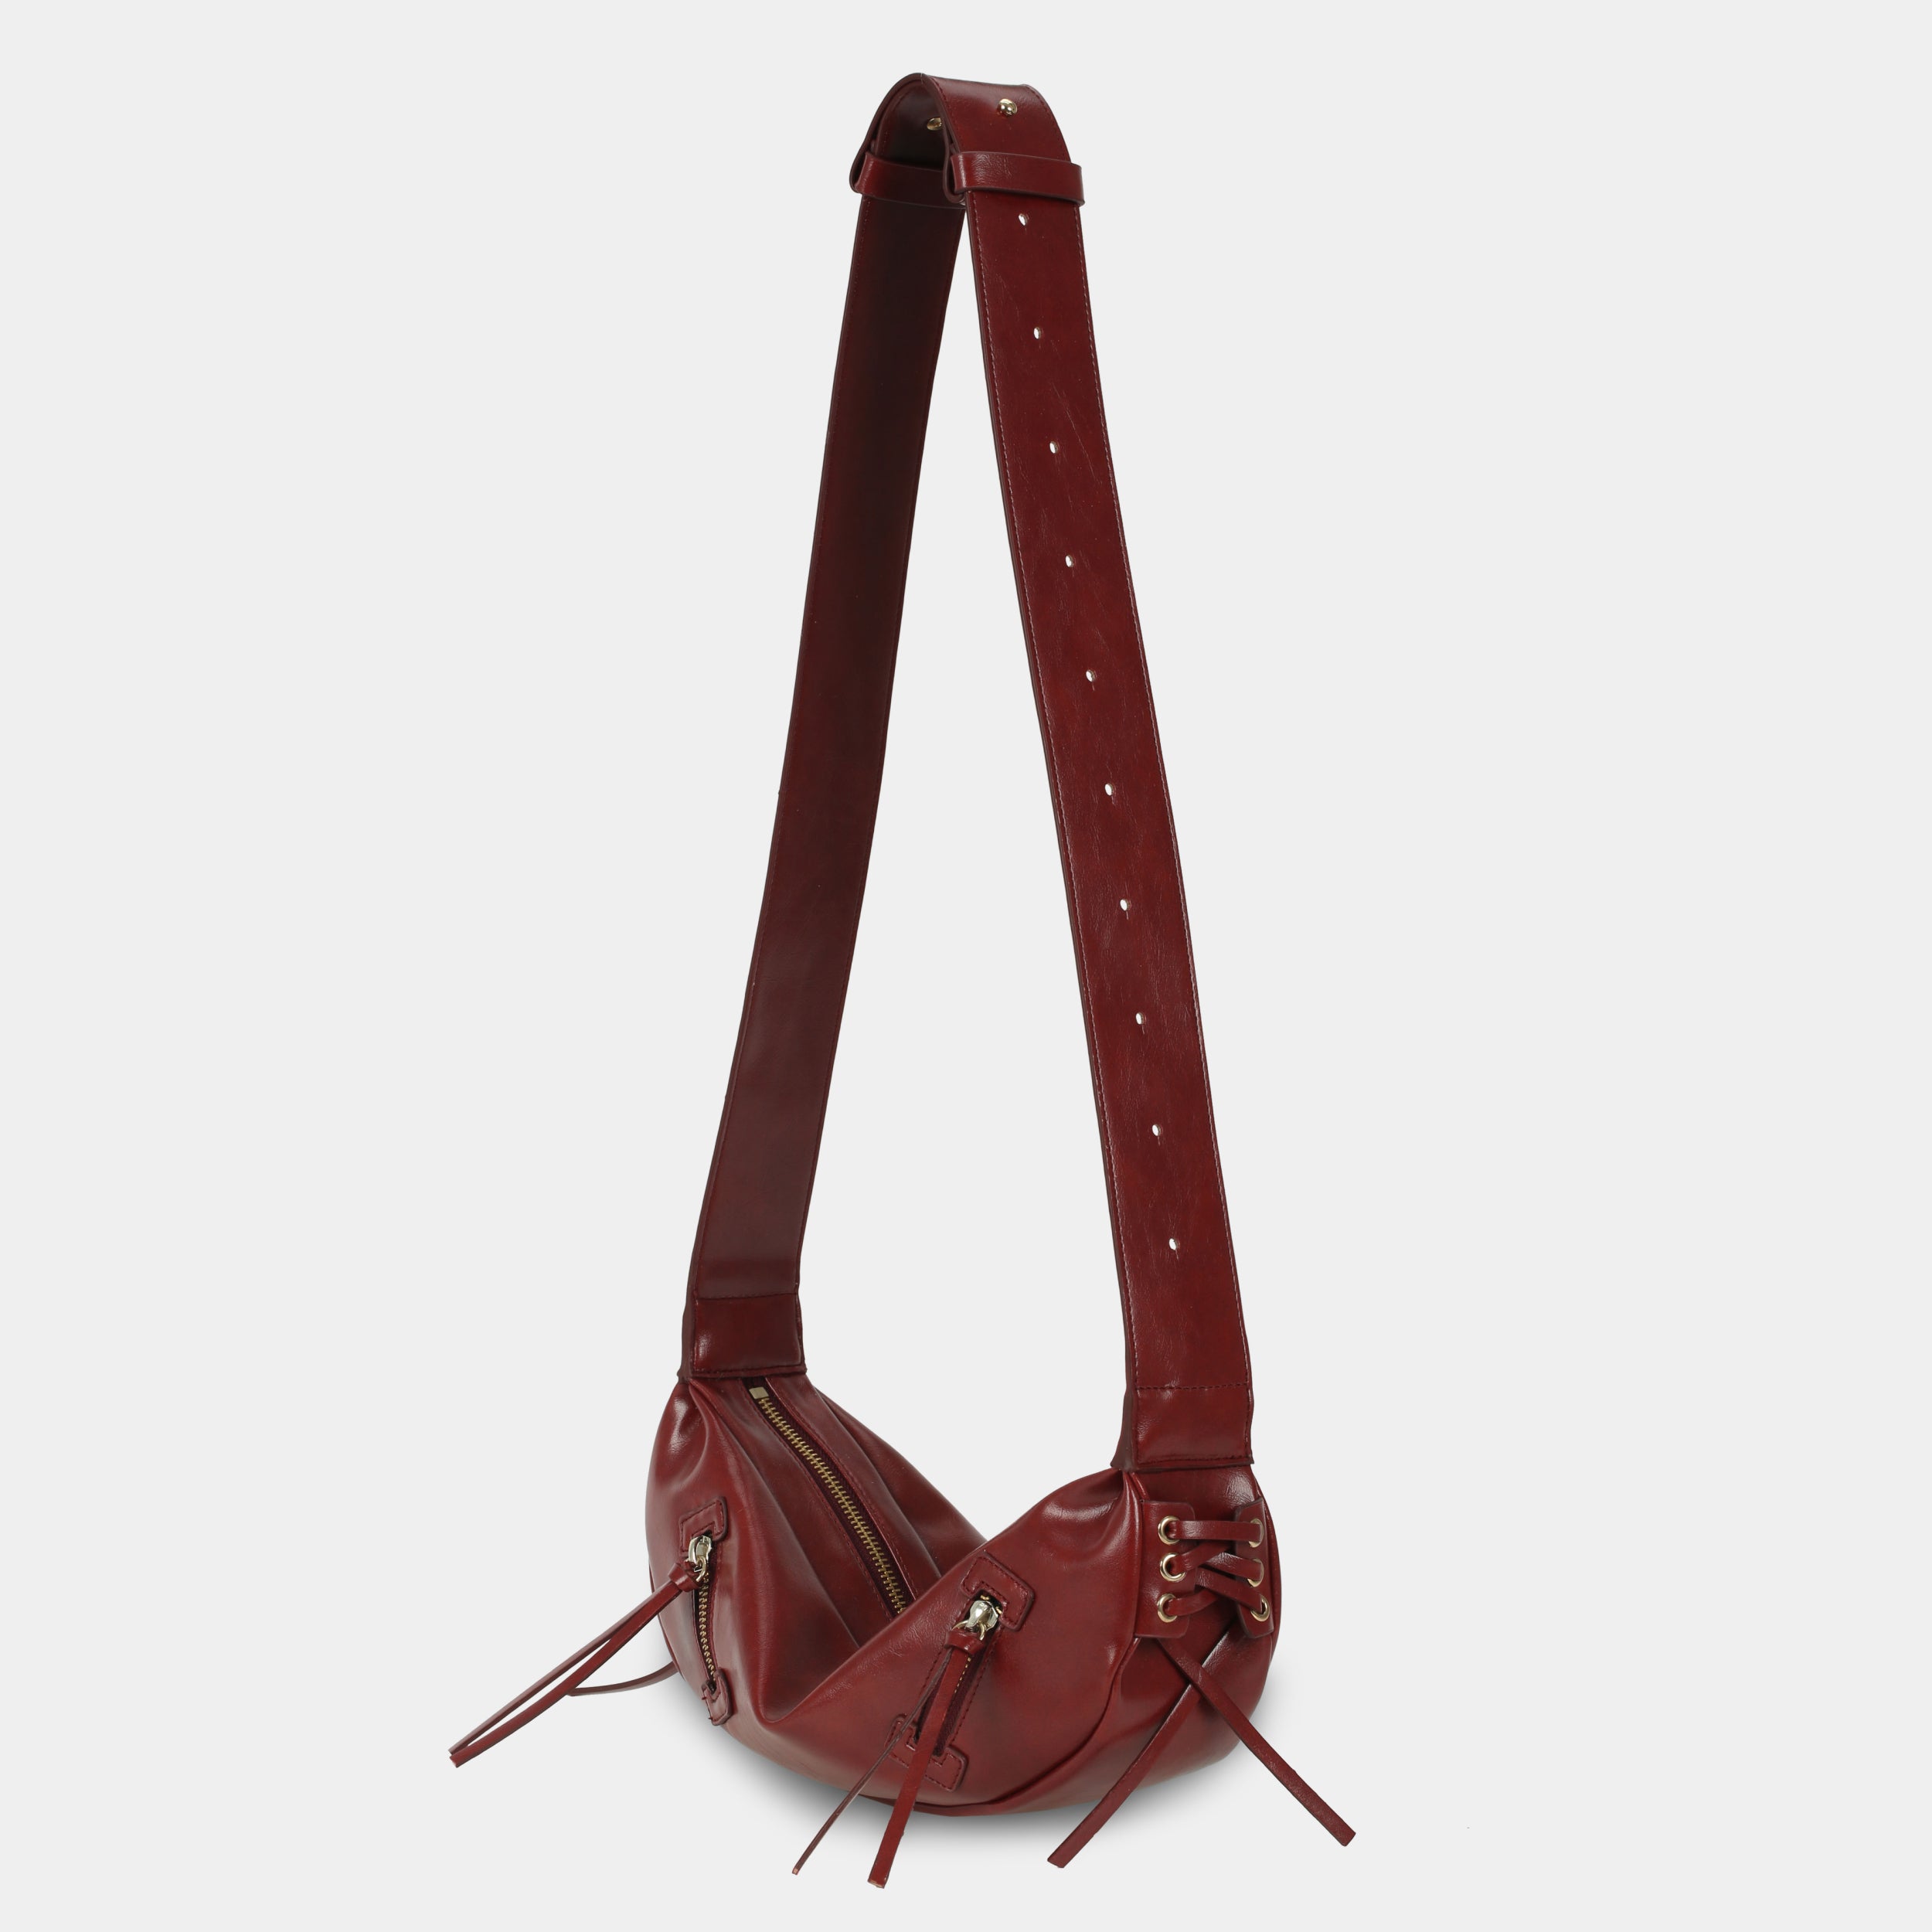 LACE bag large size (M) red color